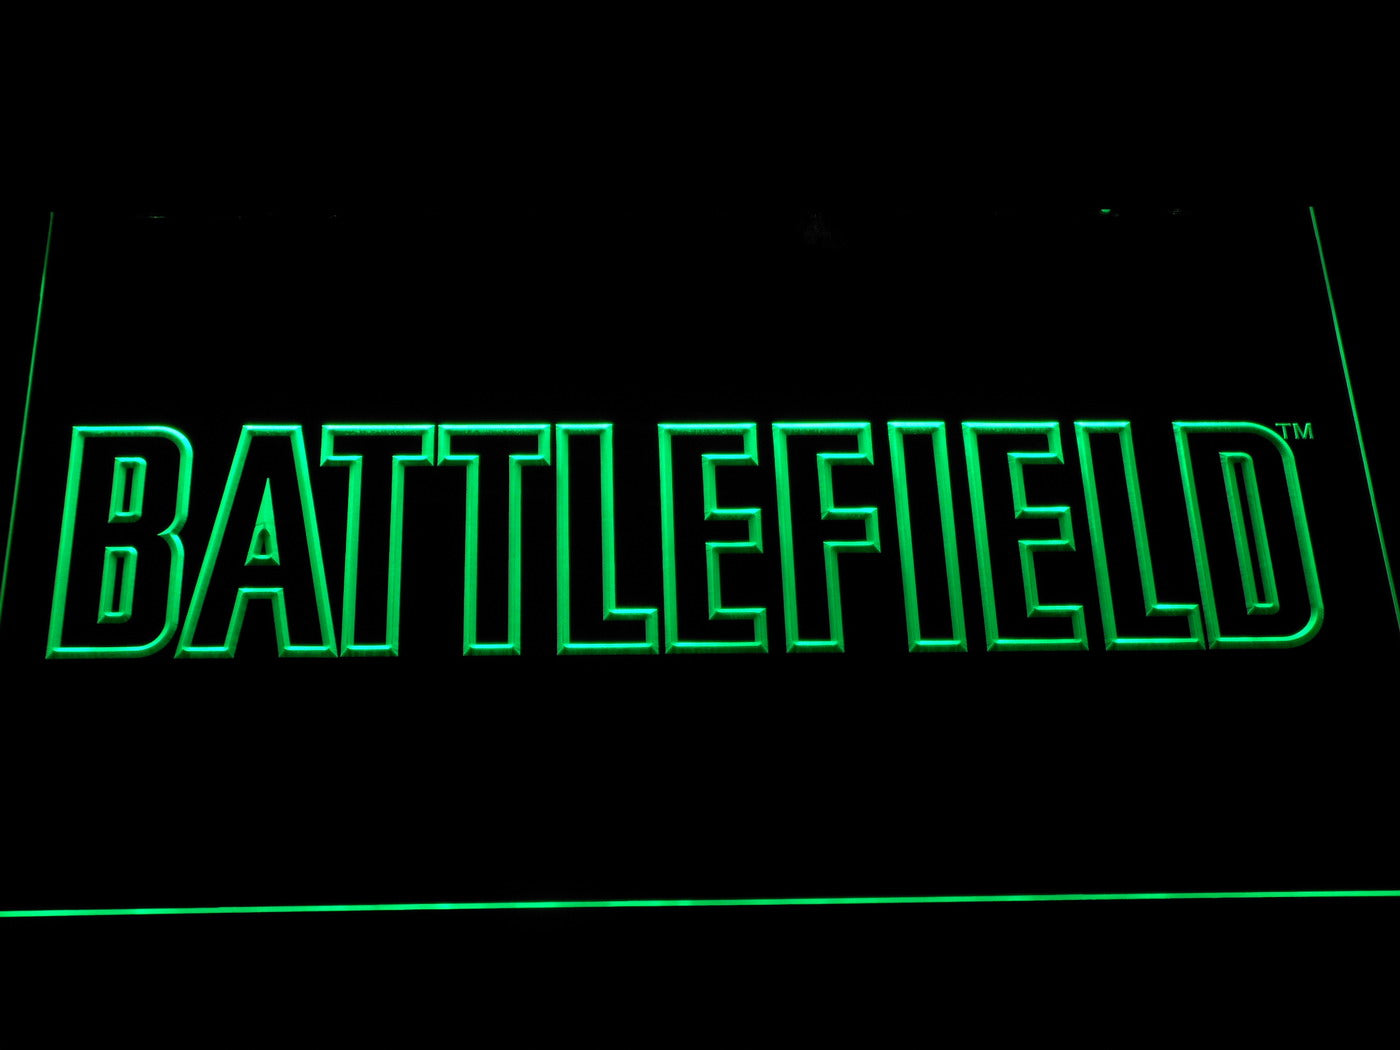 Battlefield Wordmark Neon Light LED Sign